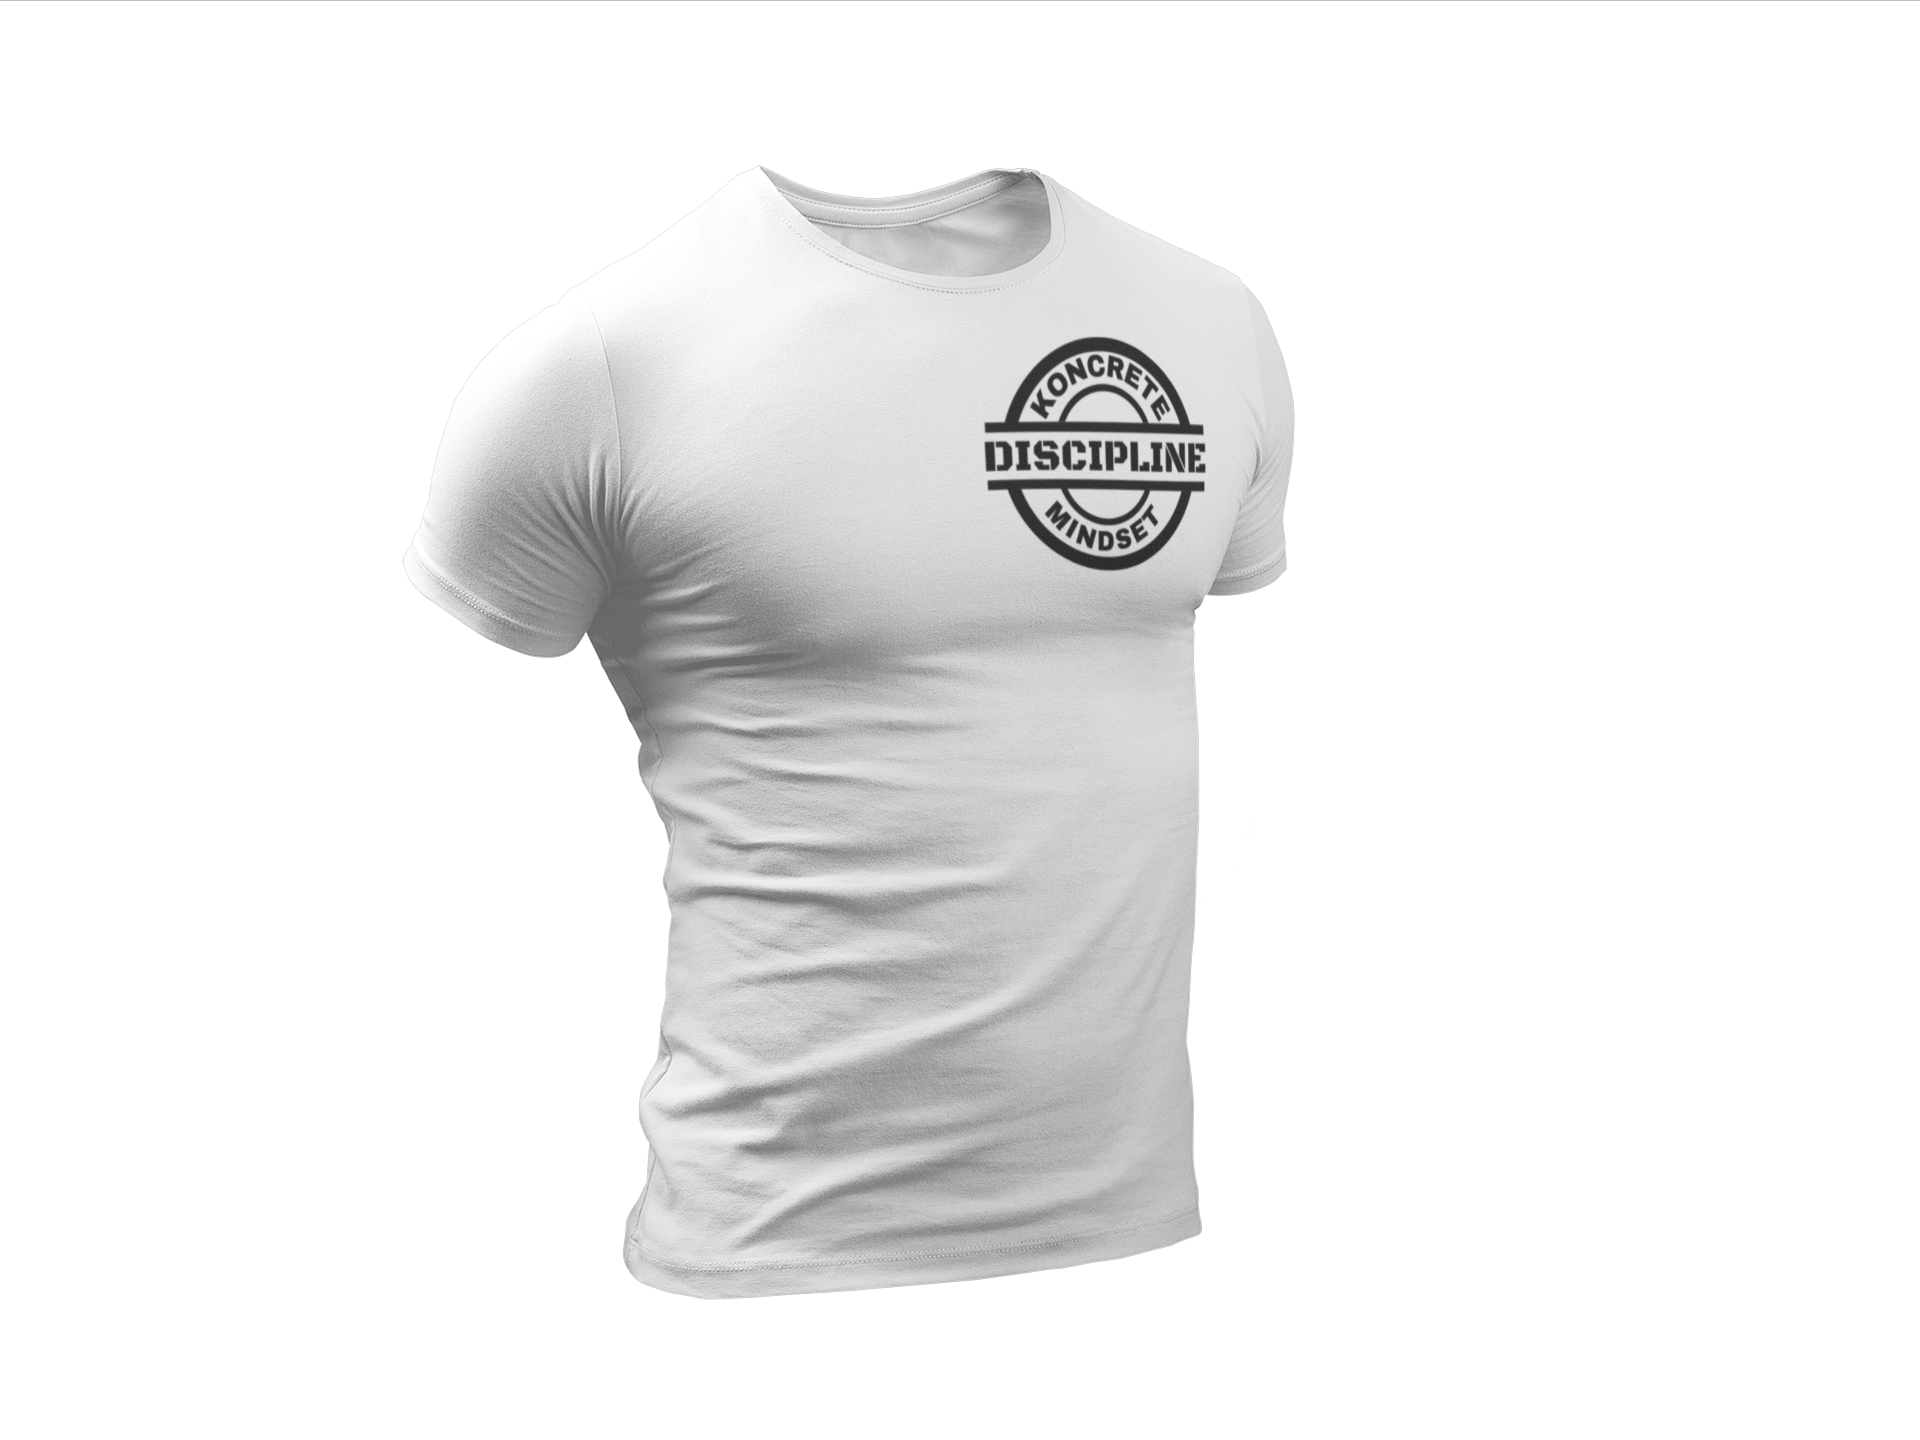 white Koncrete Mindset discipline t-shirt with black design on left chest 